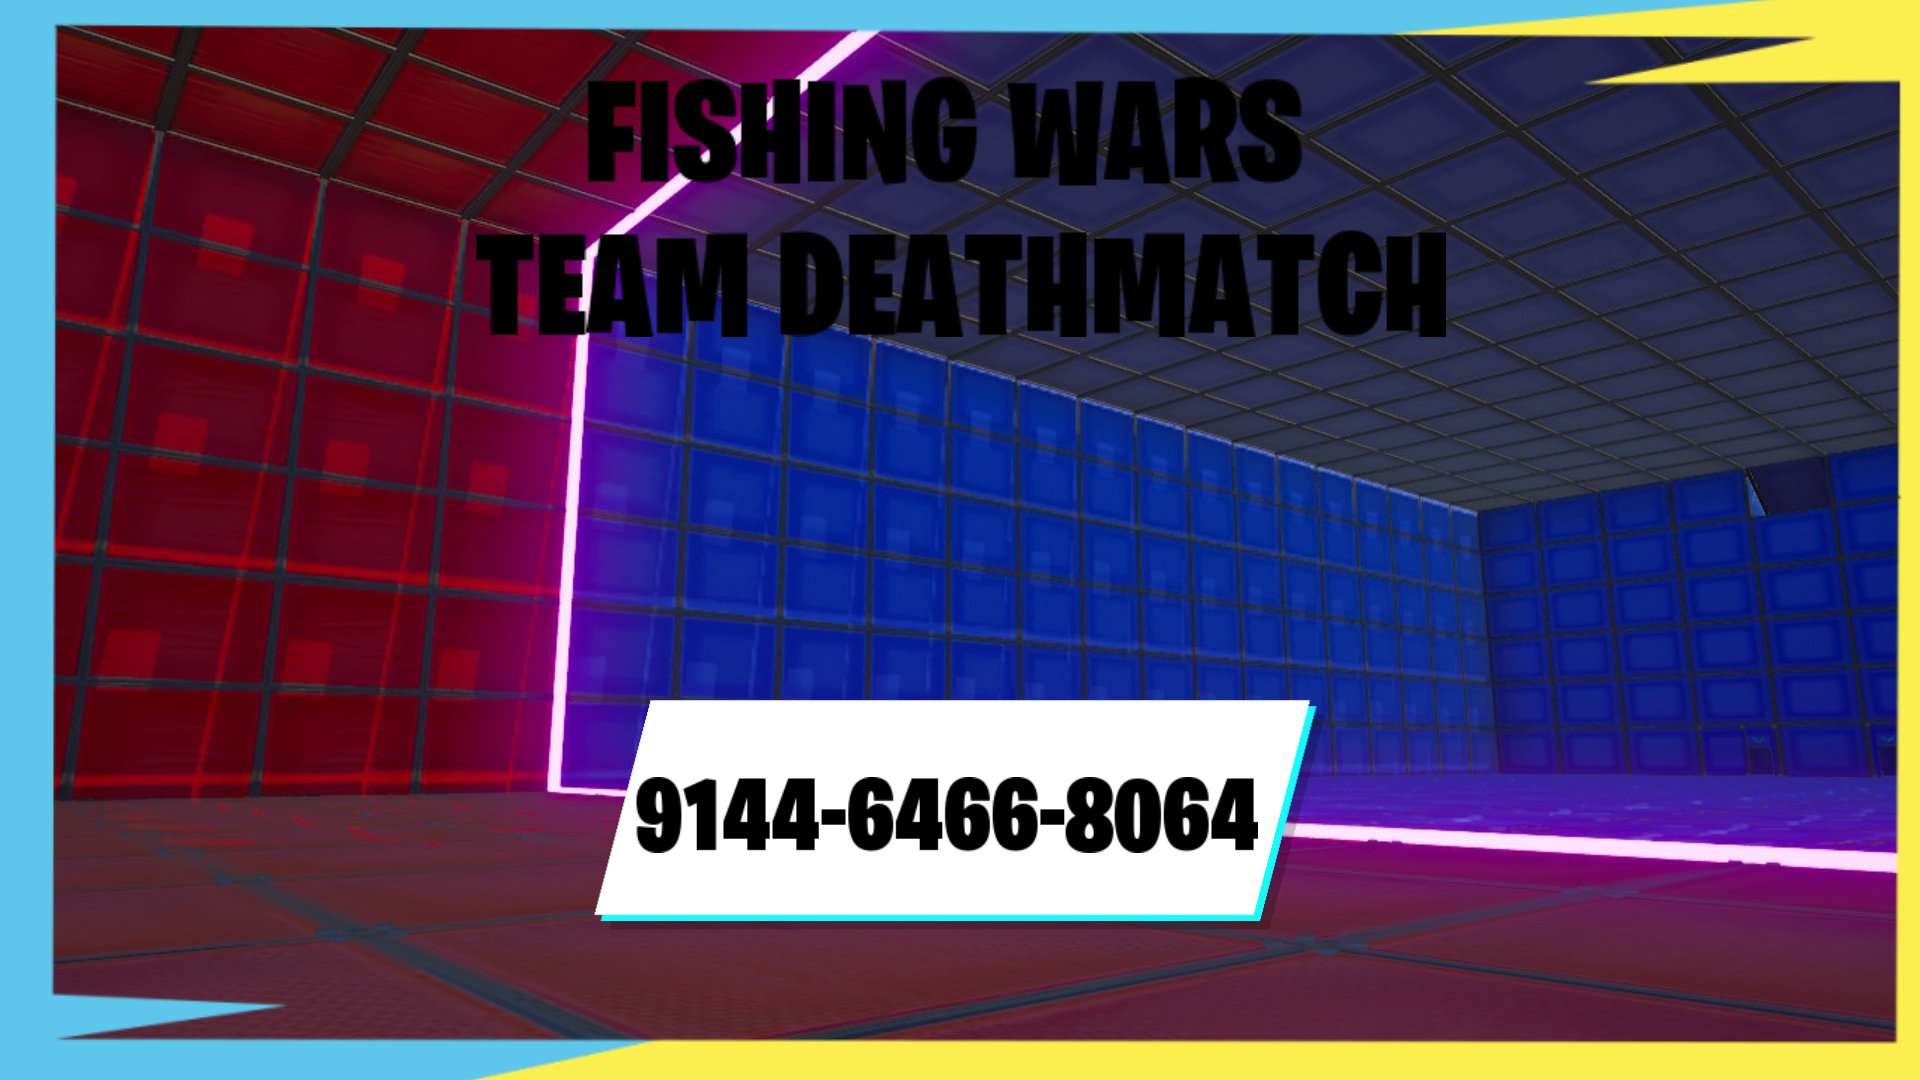 Fishing Wars | Team Deathmatch